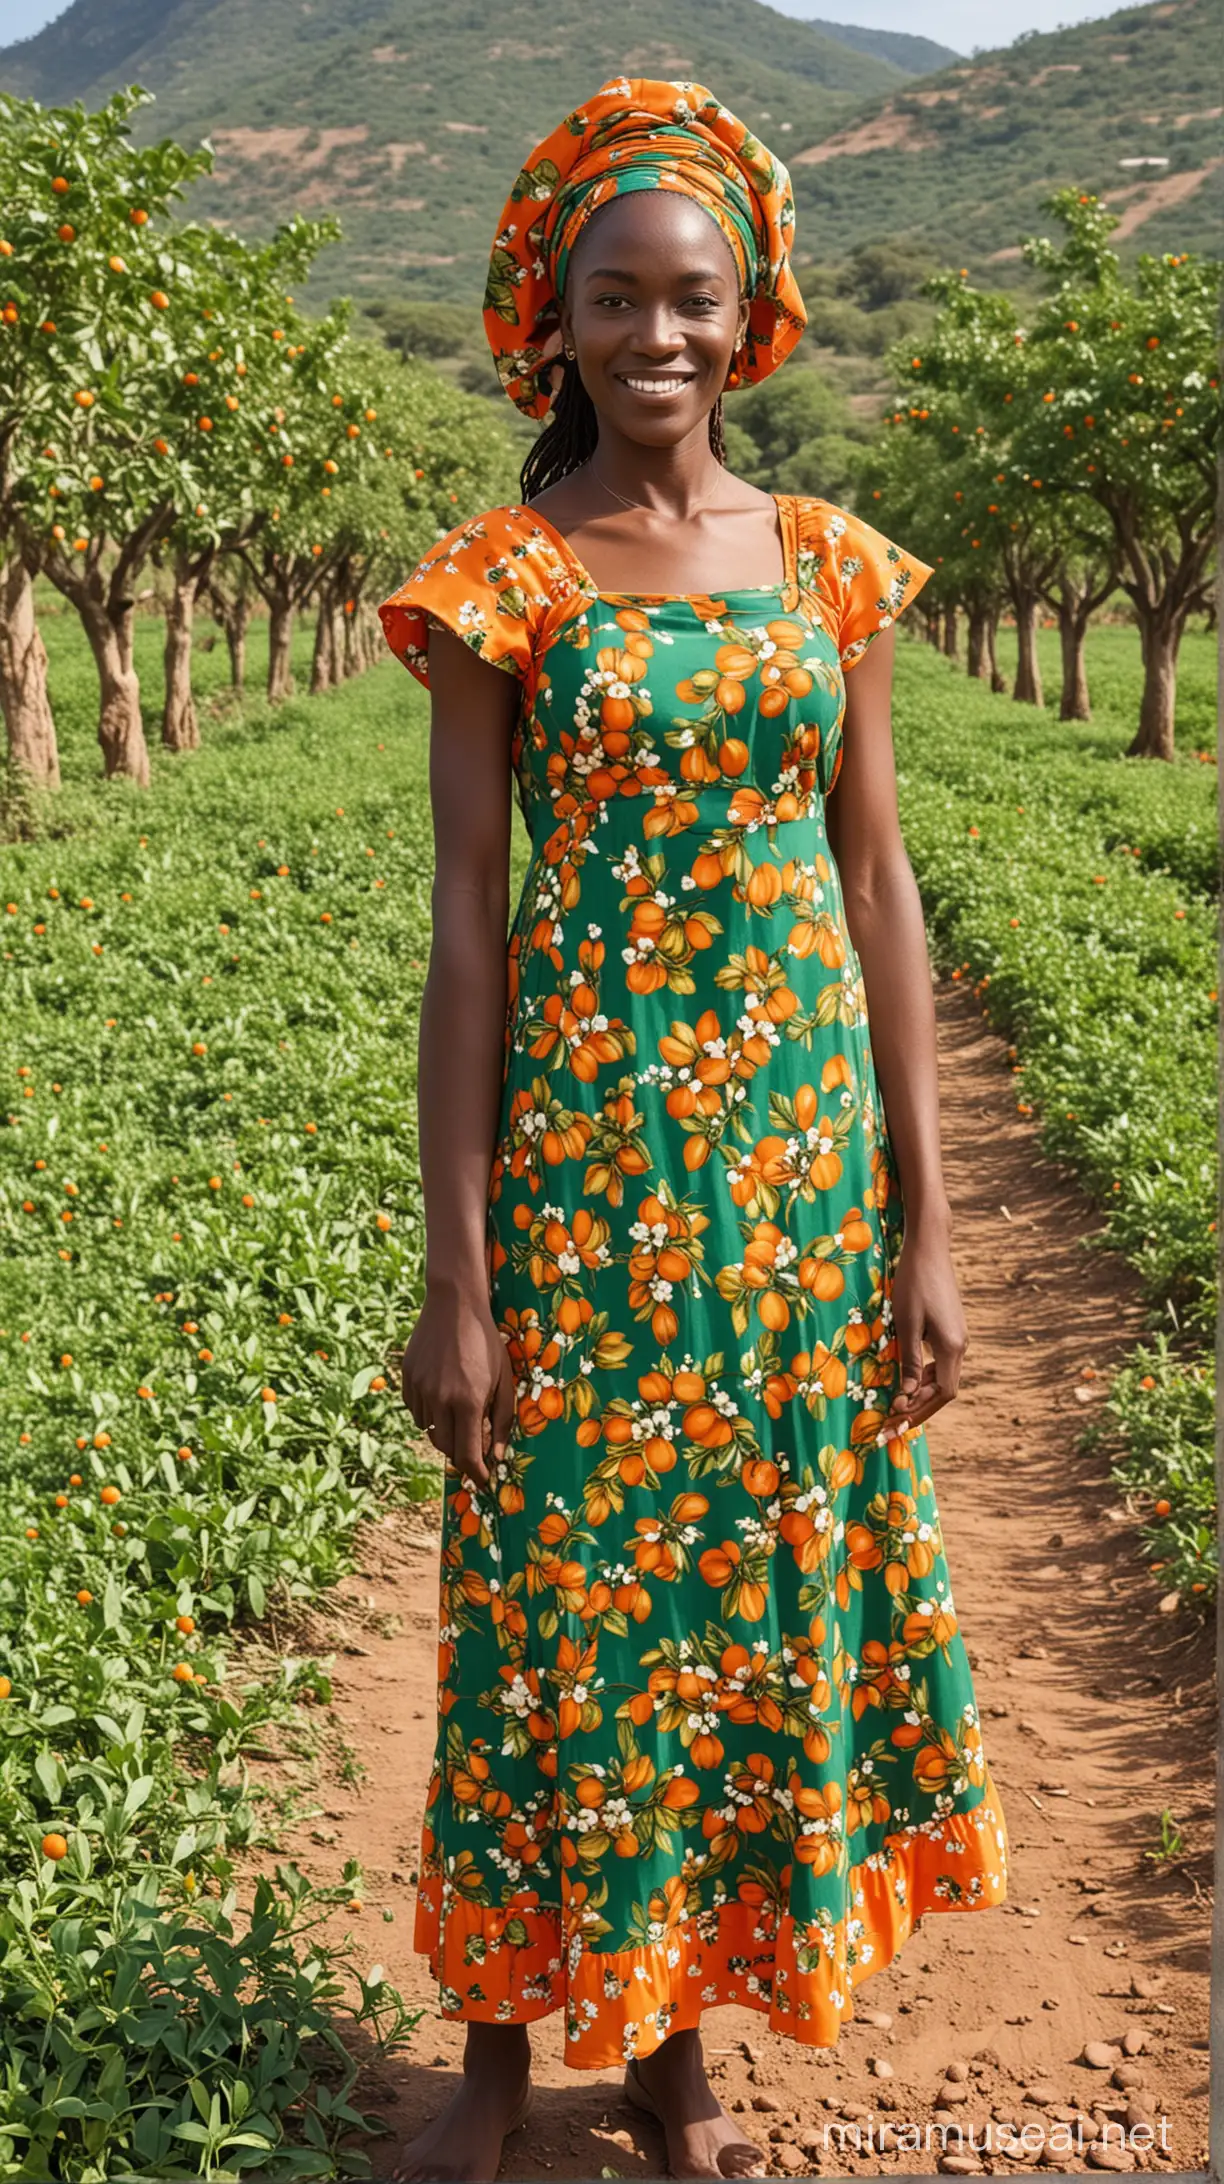 emale shea nut farmer in green and orange dress
